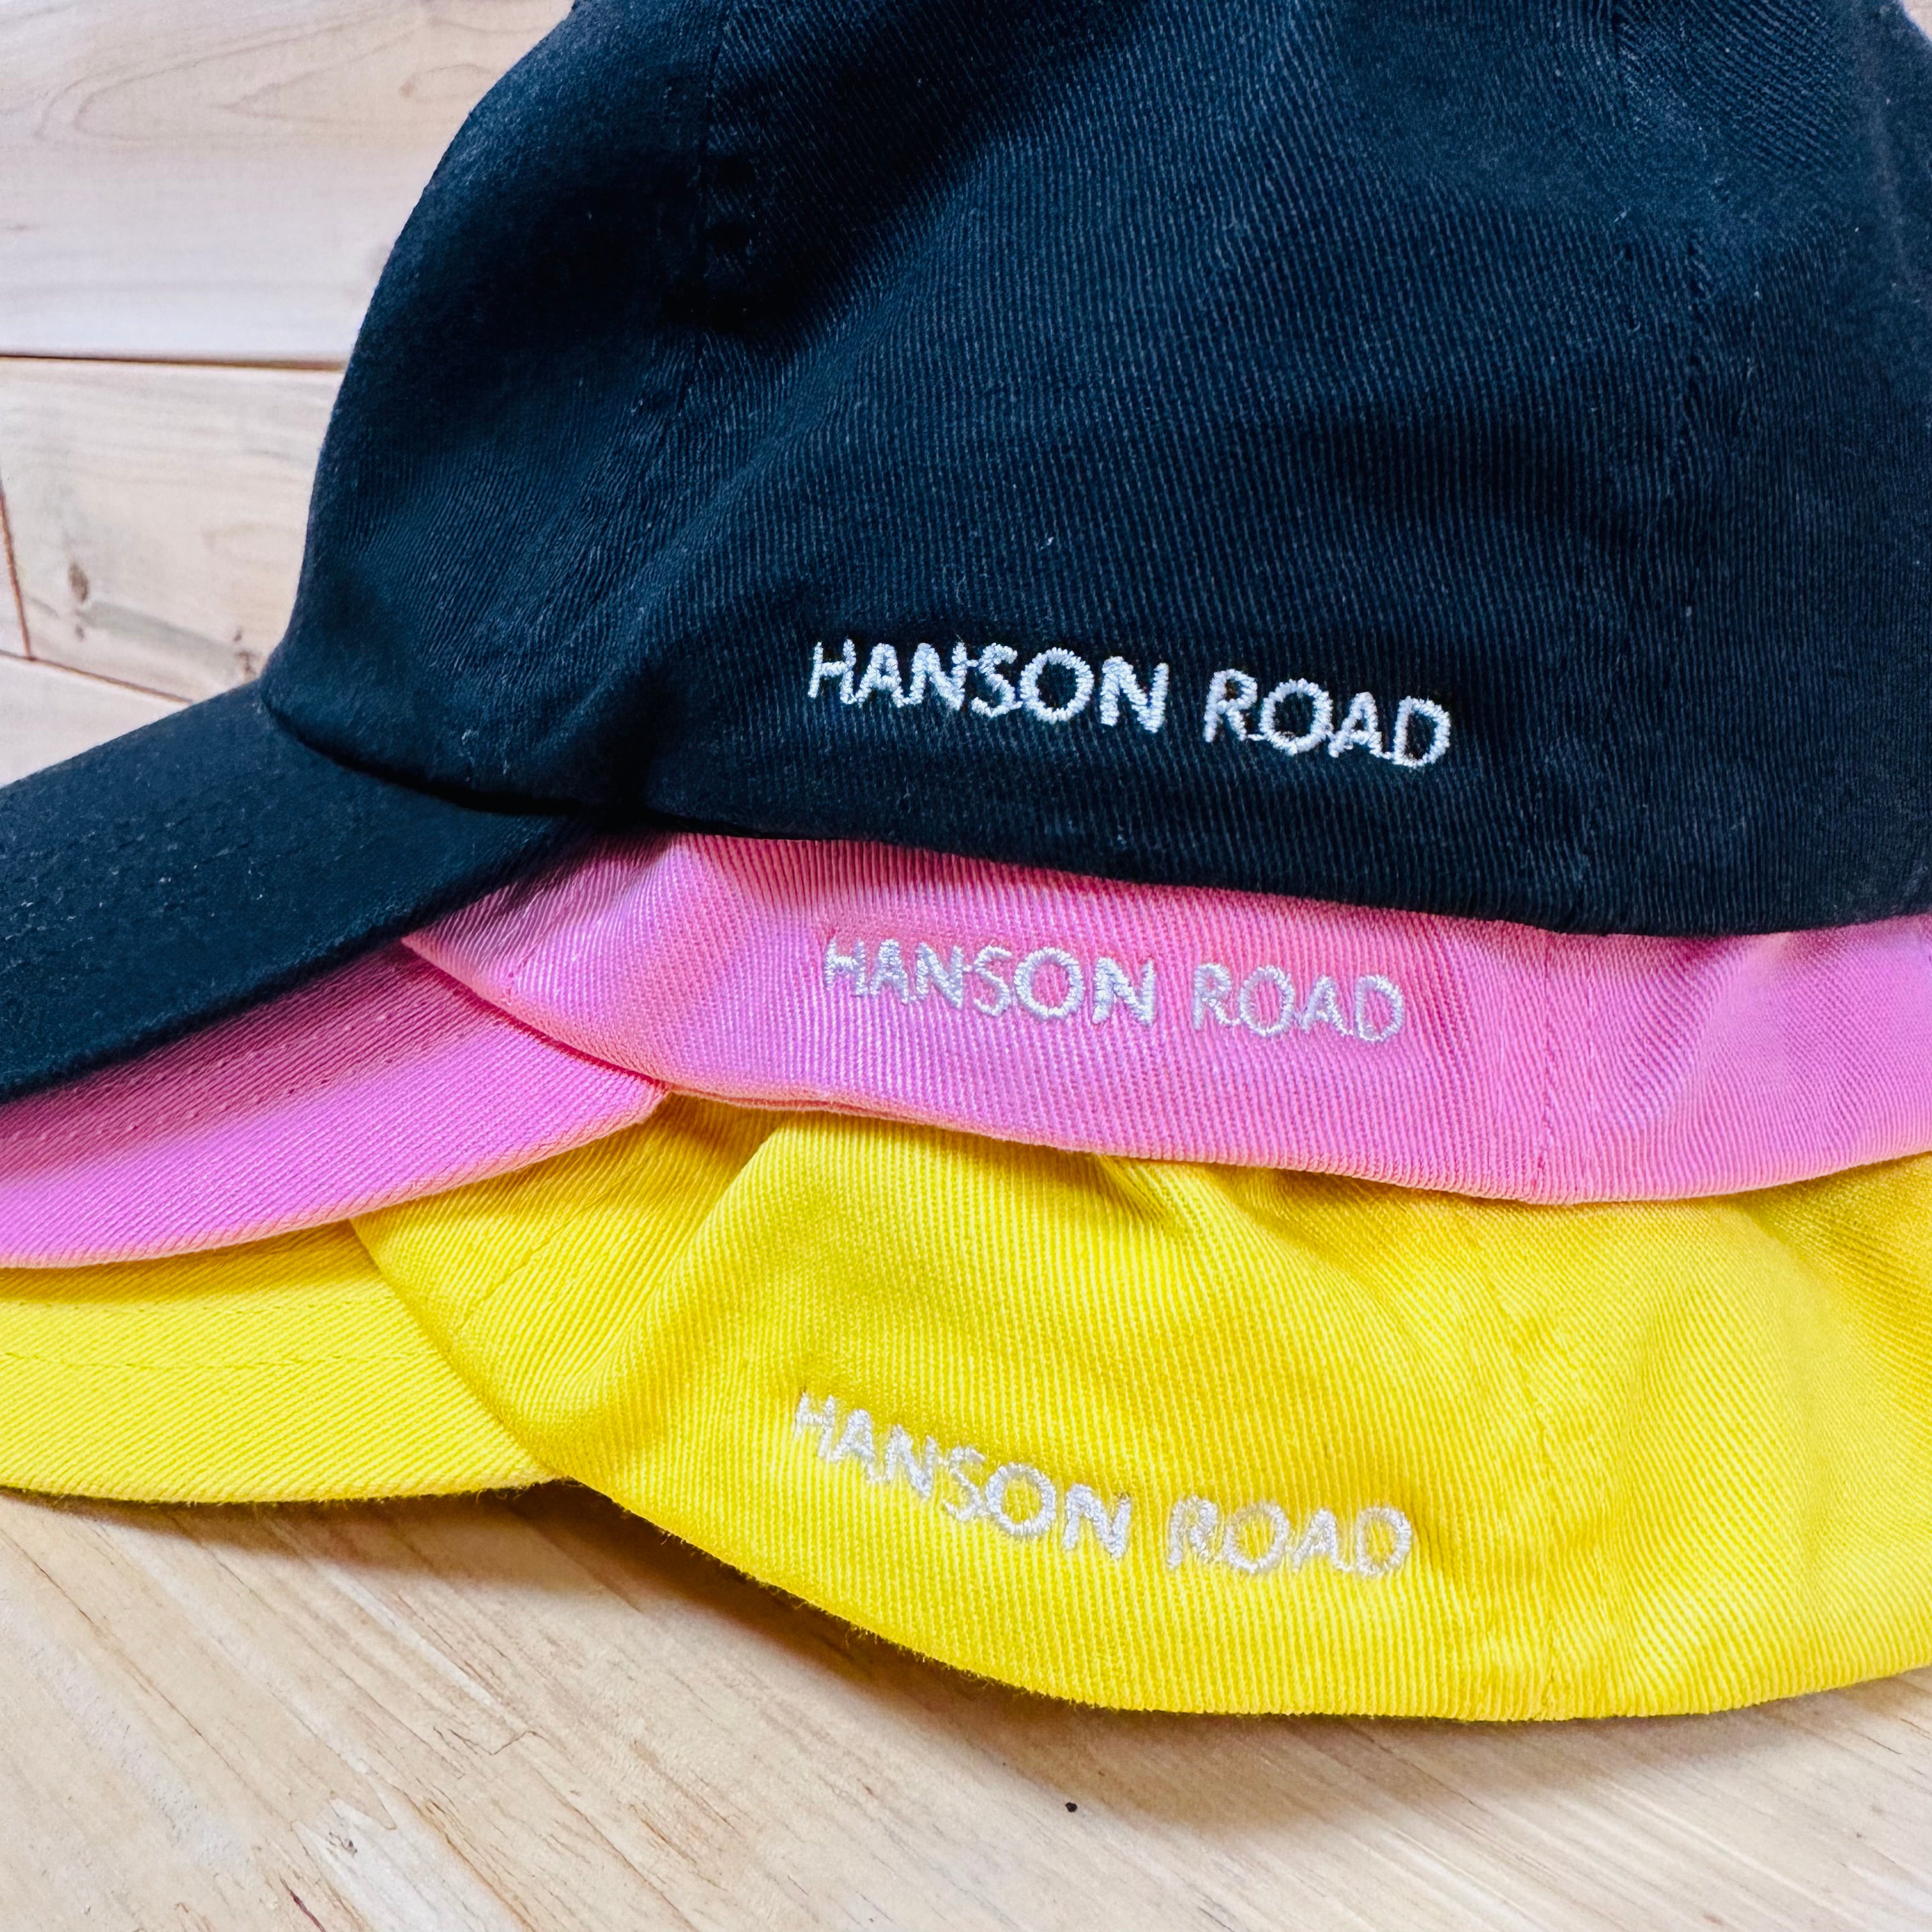 Hanson Road Label